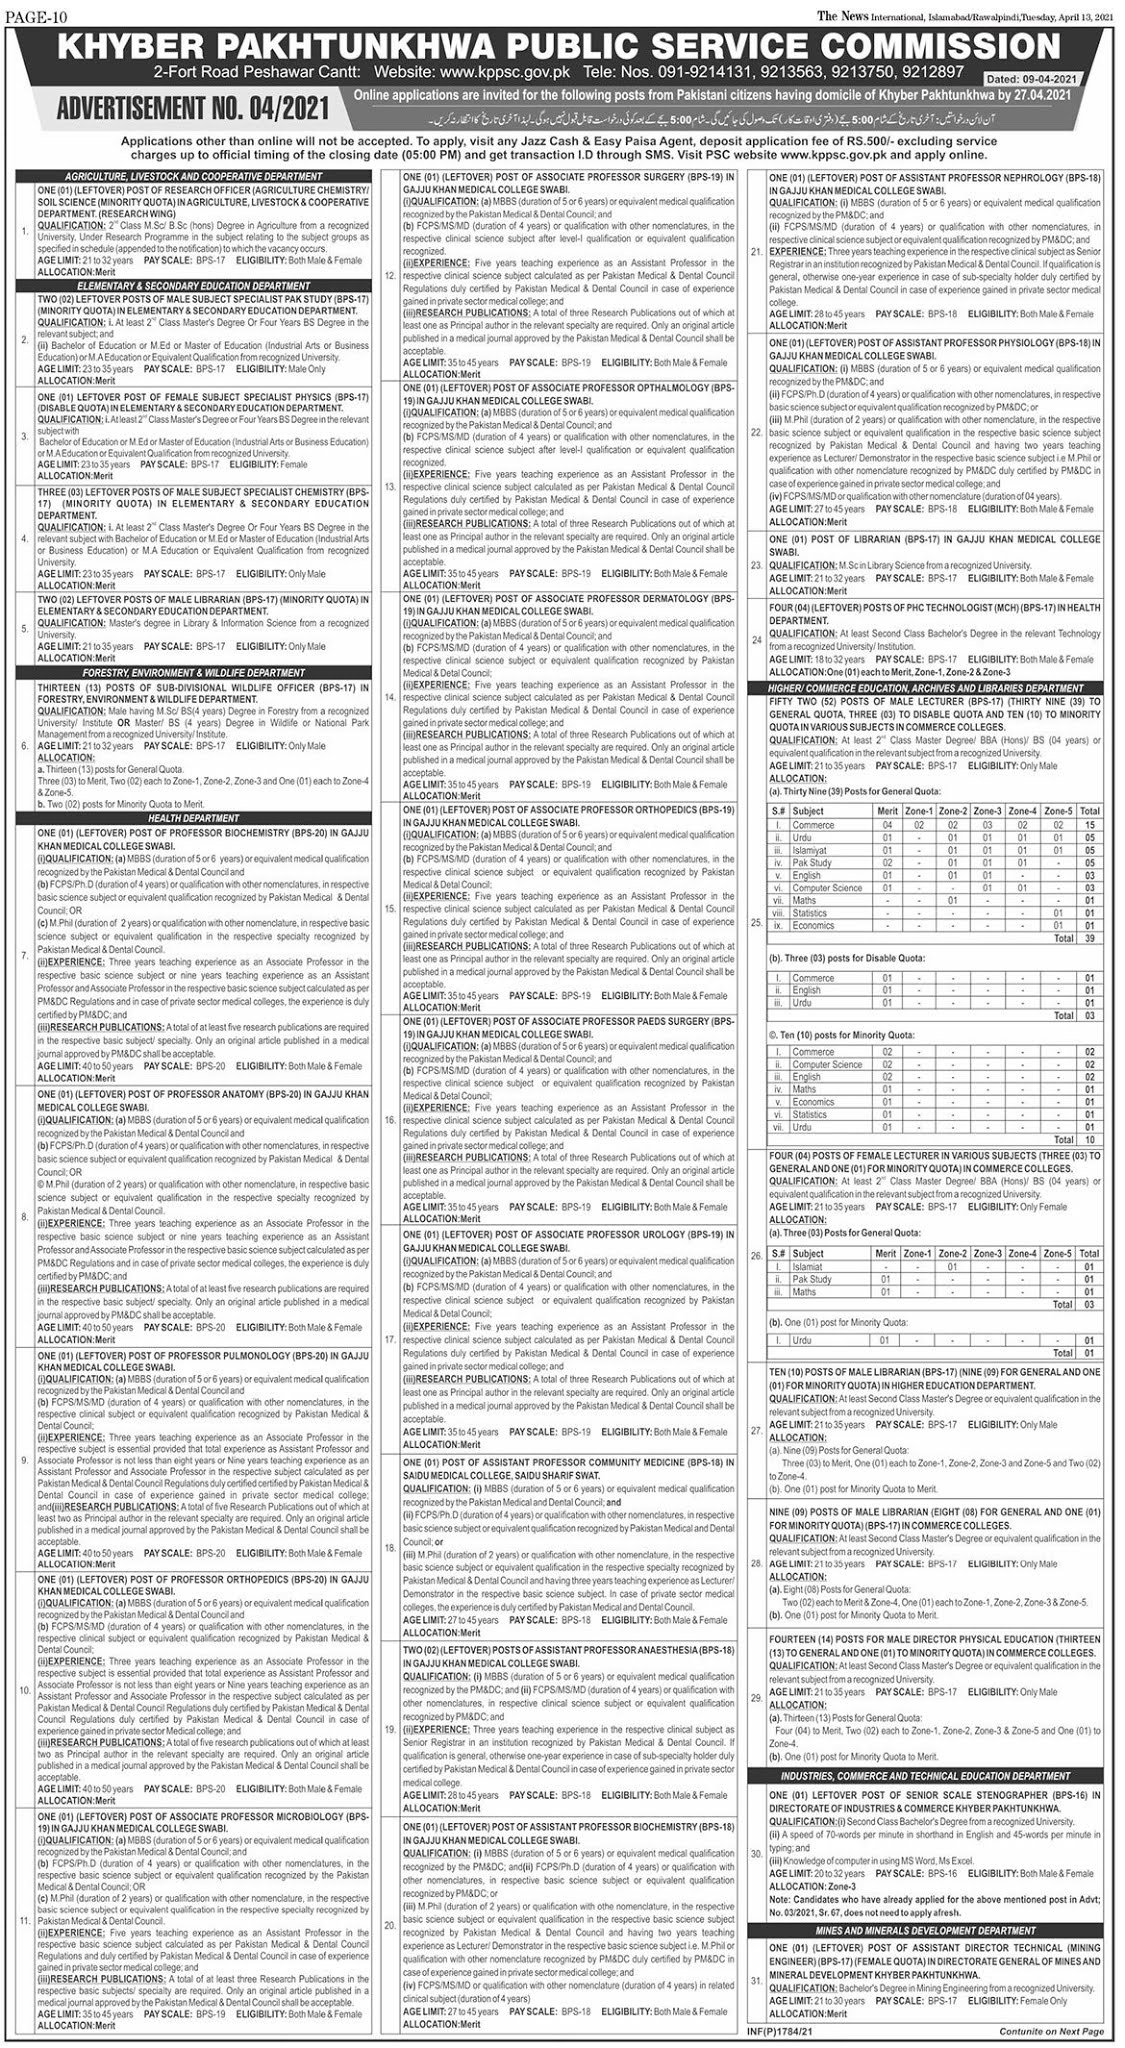 www.kppsc.gov.pk Jobs 2021 - KPPSC New Advertisement 2021 - Khyber Pakhtunkhwa Public Service Commission KPPSC Jobs 2021 in Pakistan